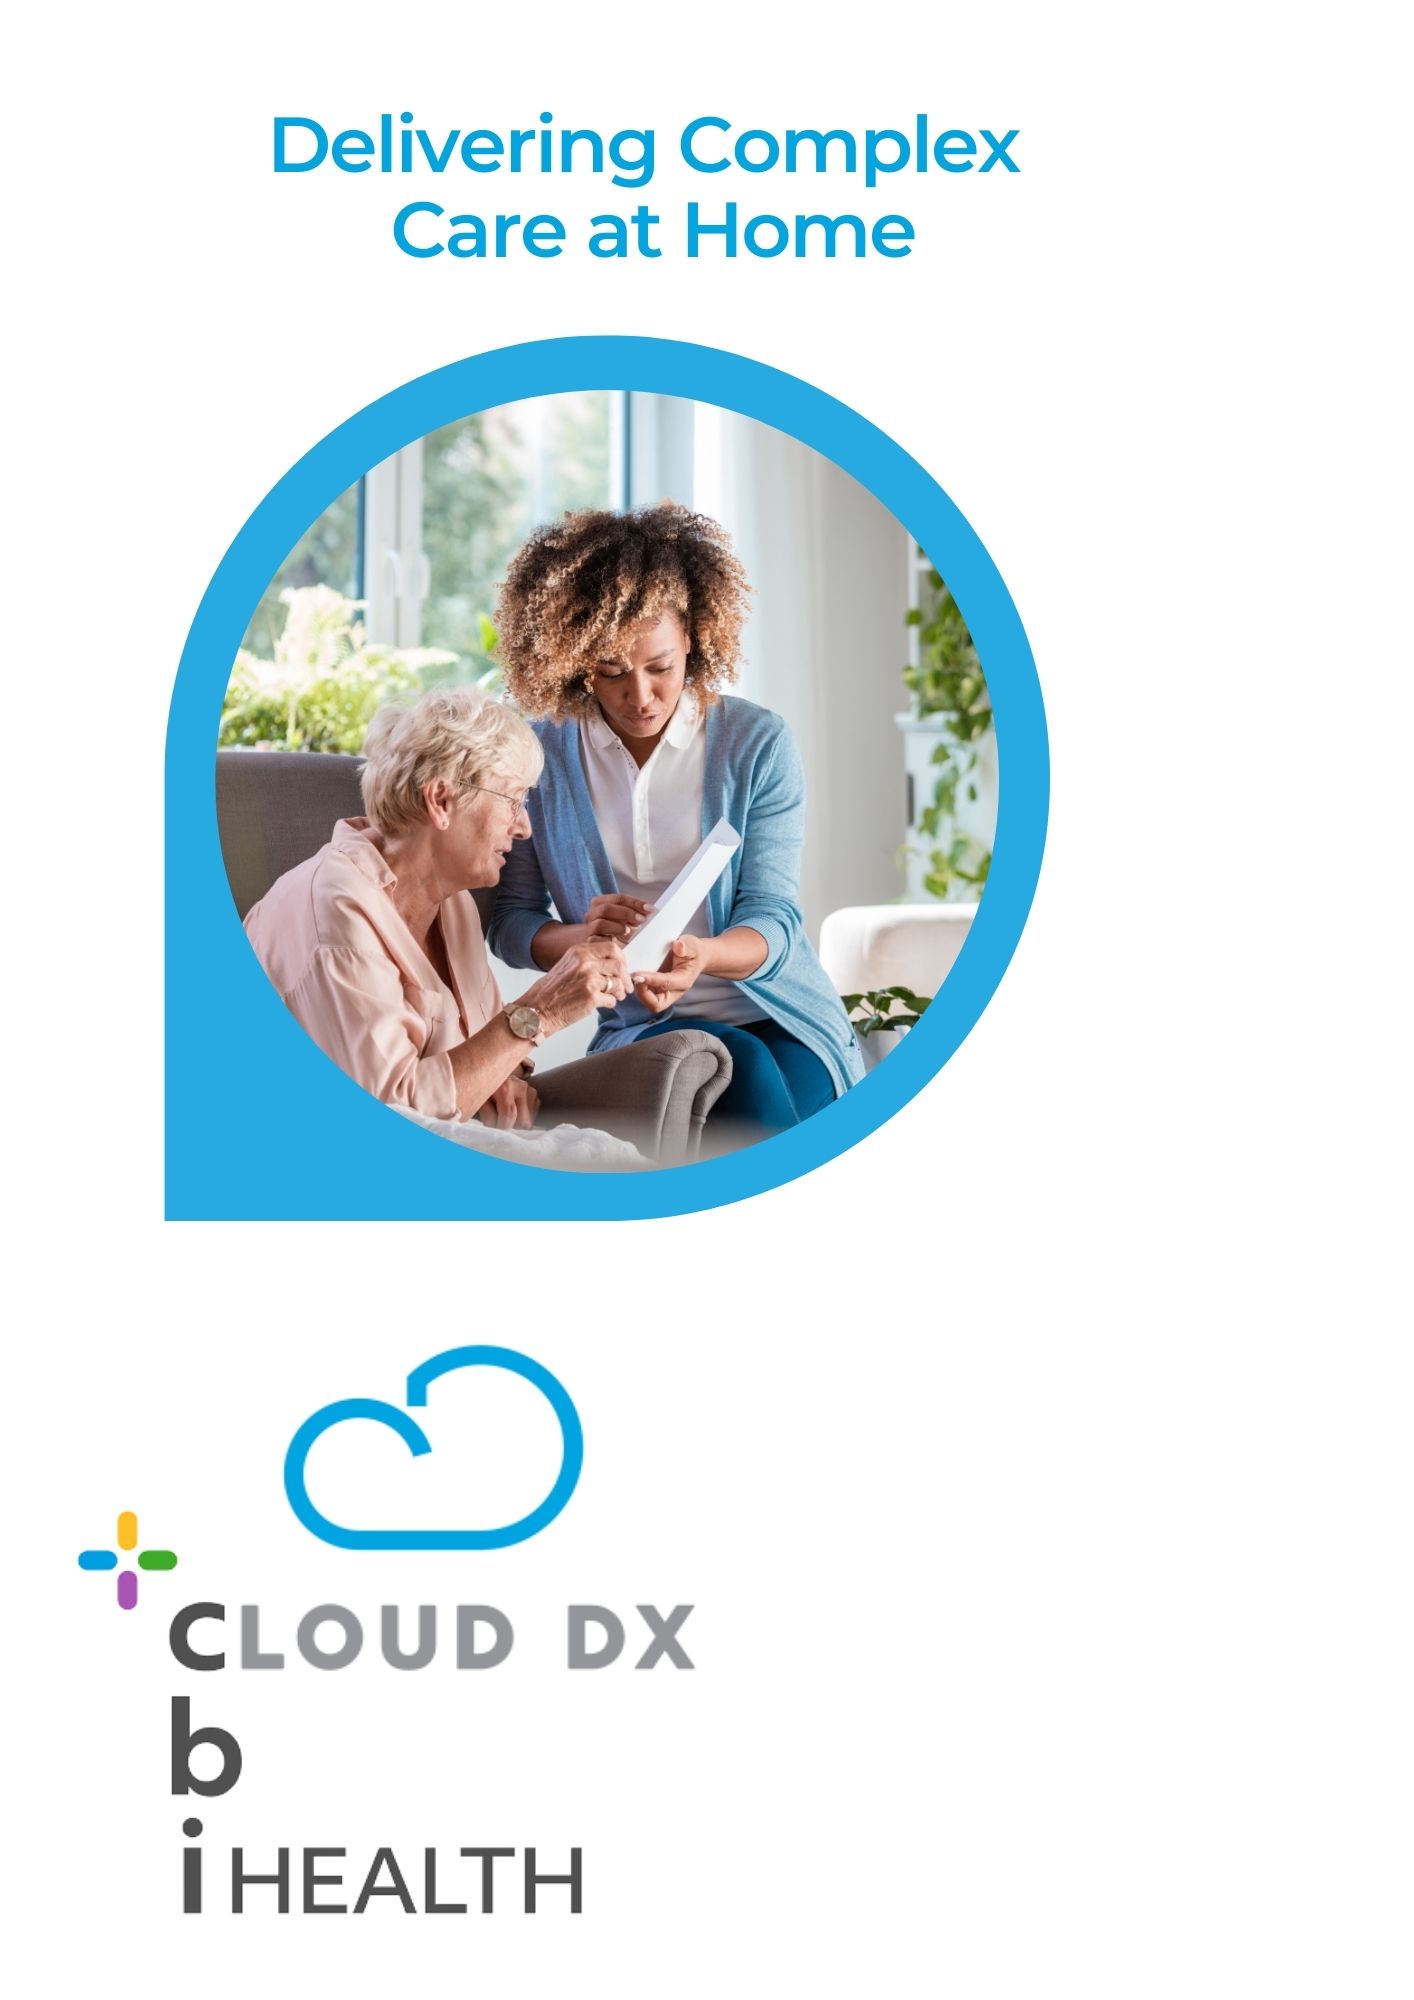 Cloud DX Inc., Monday, September 26, 2022, Press release picture